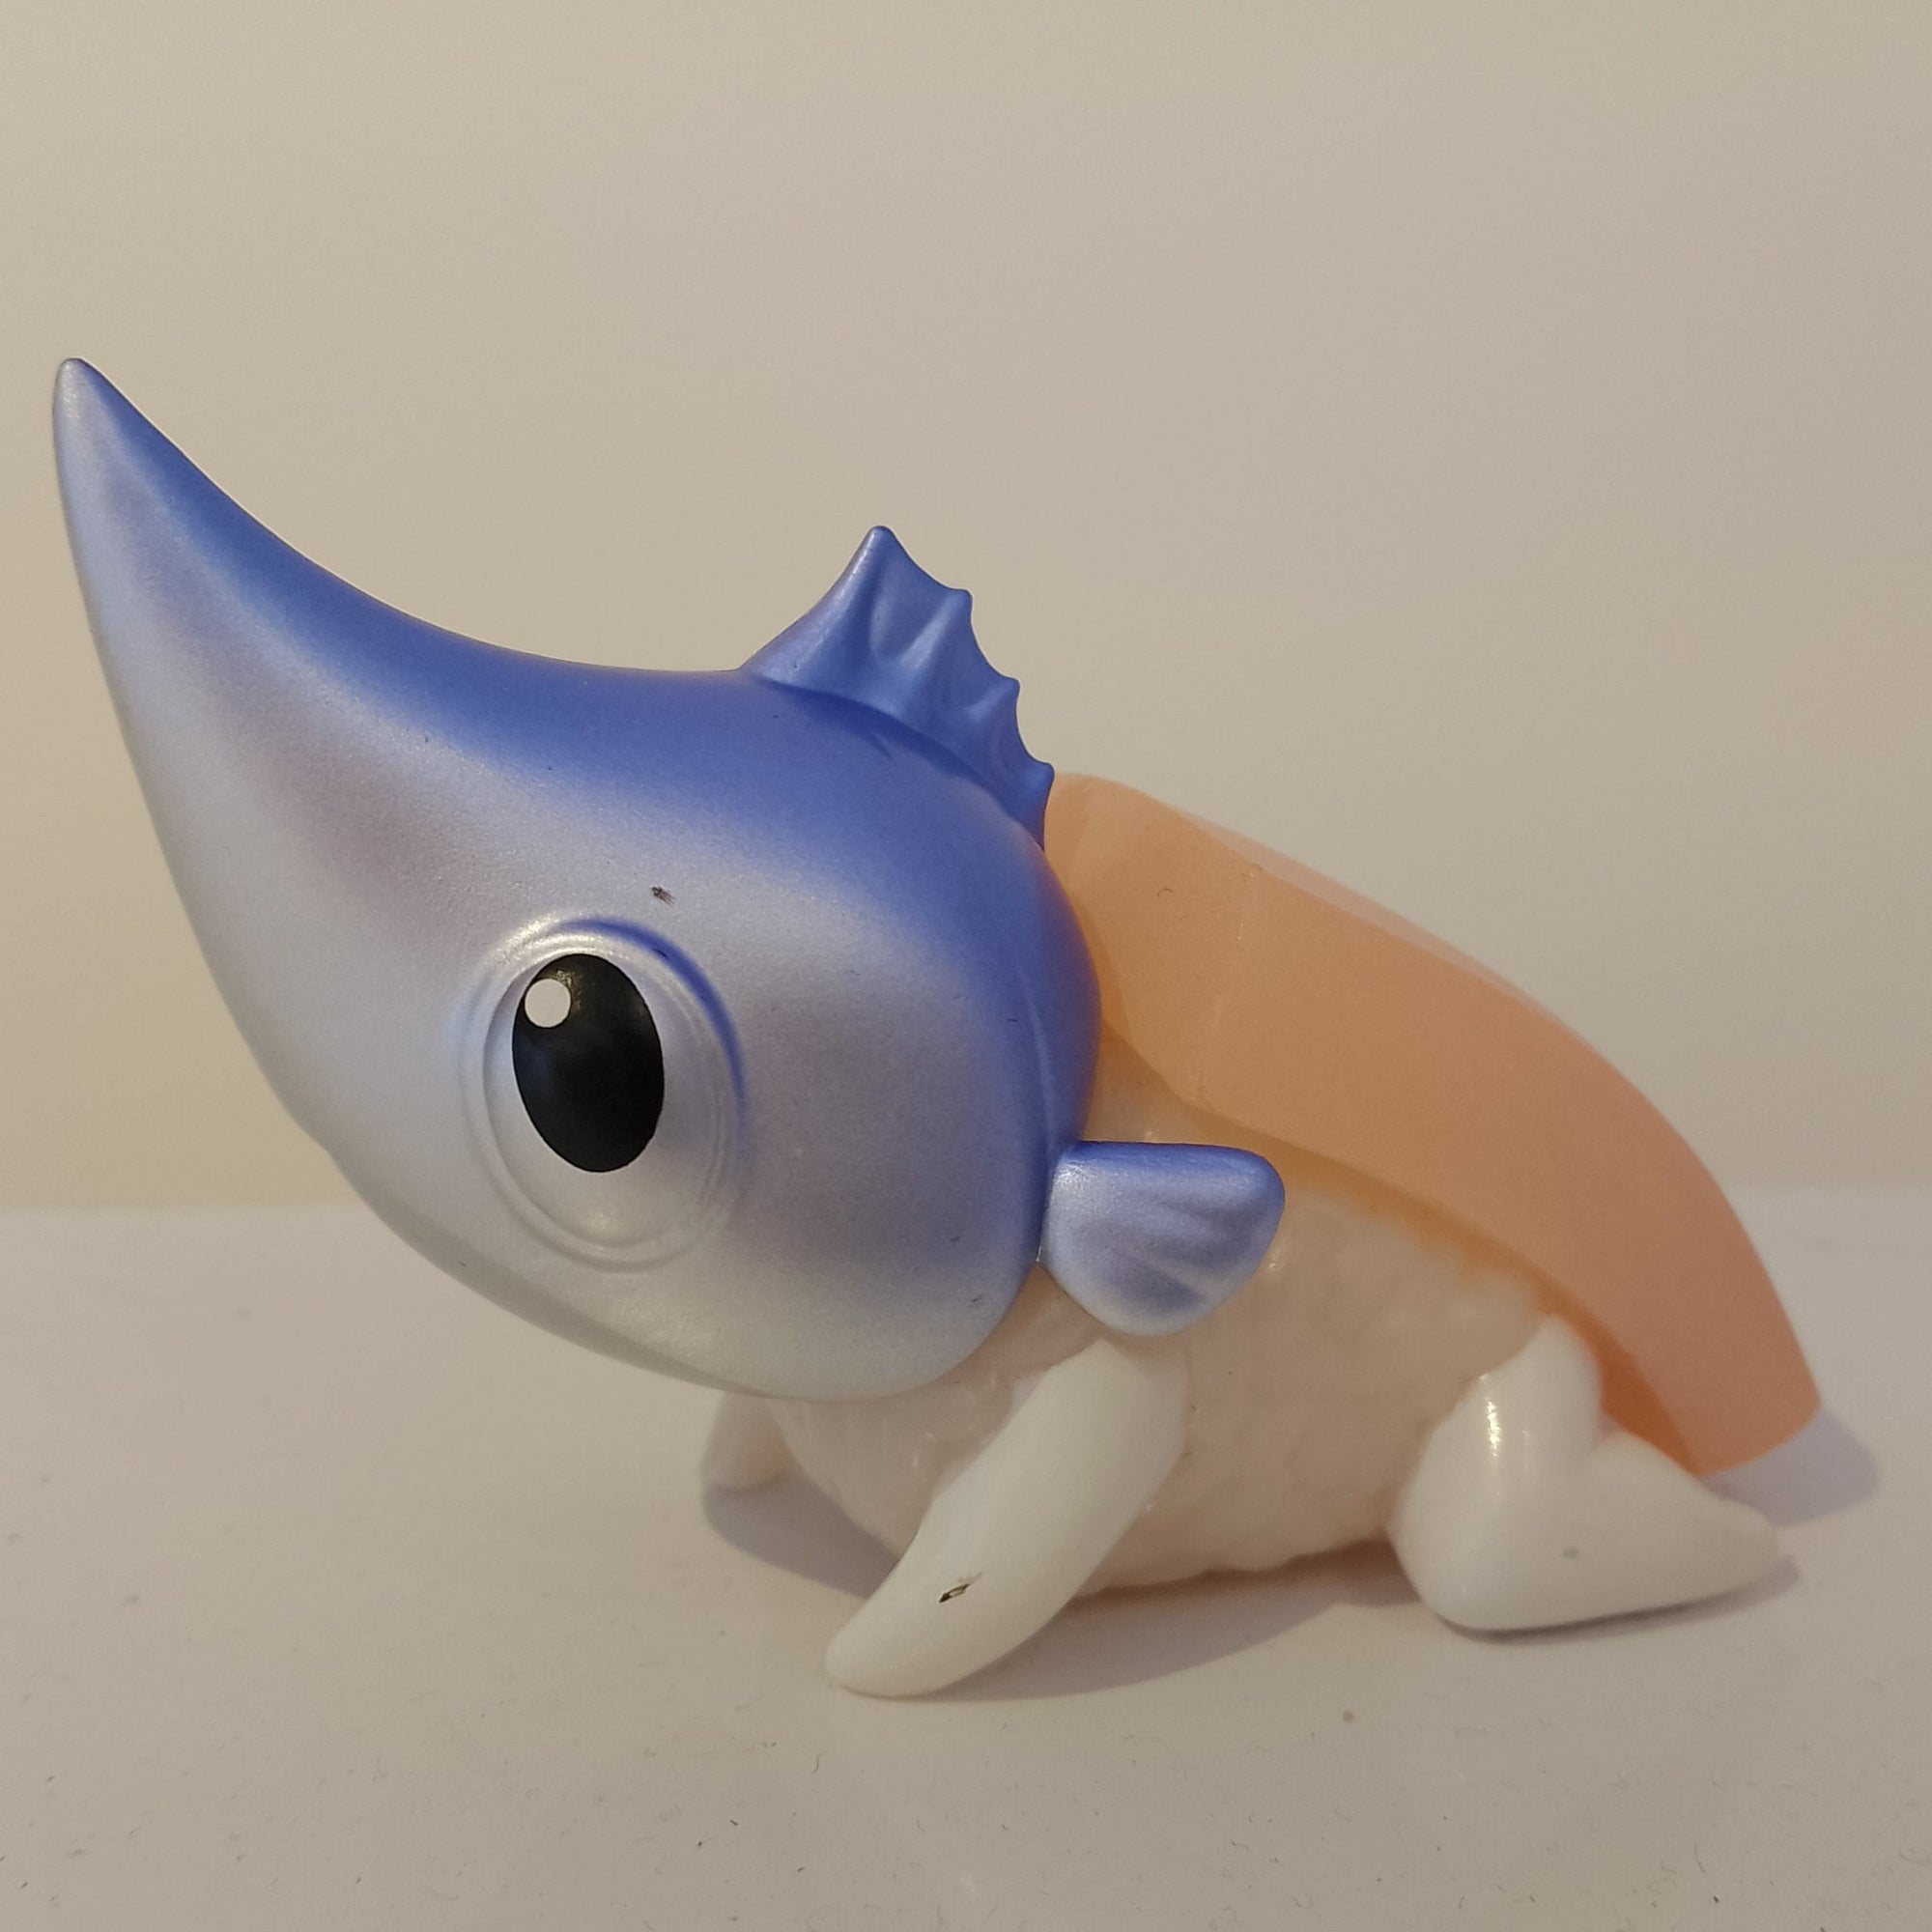 Marlin Fish - Baby Sushi Blind Box Series Toys by Chino Lam x POP MART